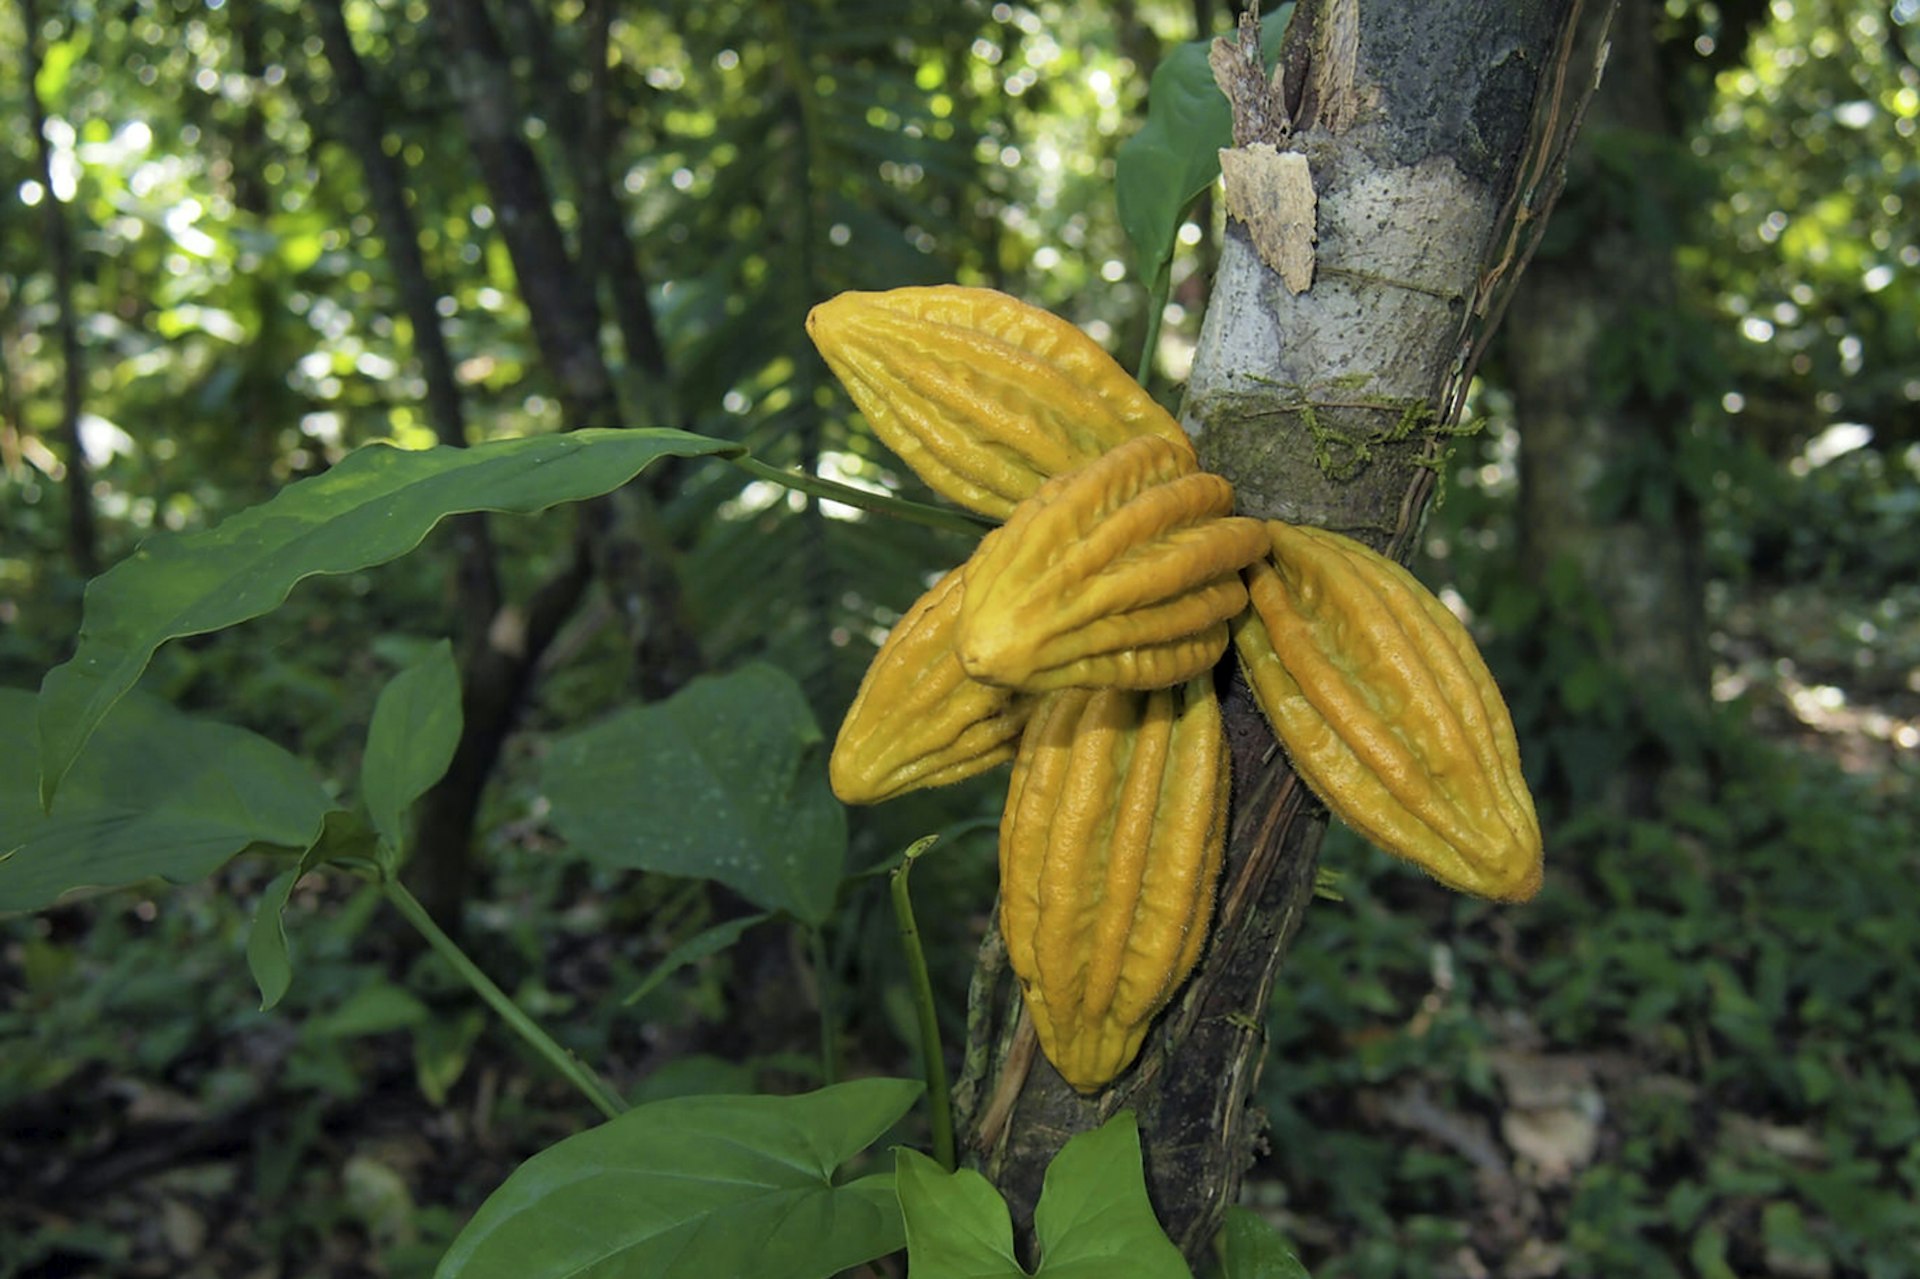 Wild cacao pods on a tree in the jungle, Bocas del Toro, Caribbean, Panama